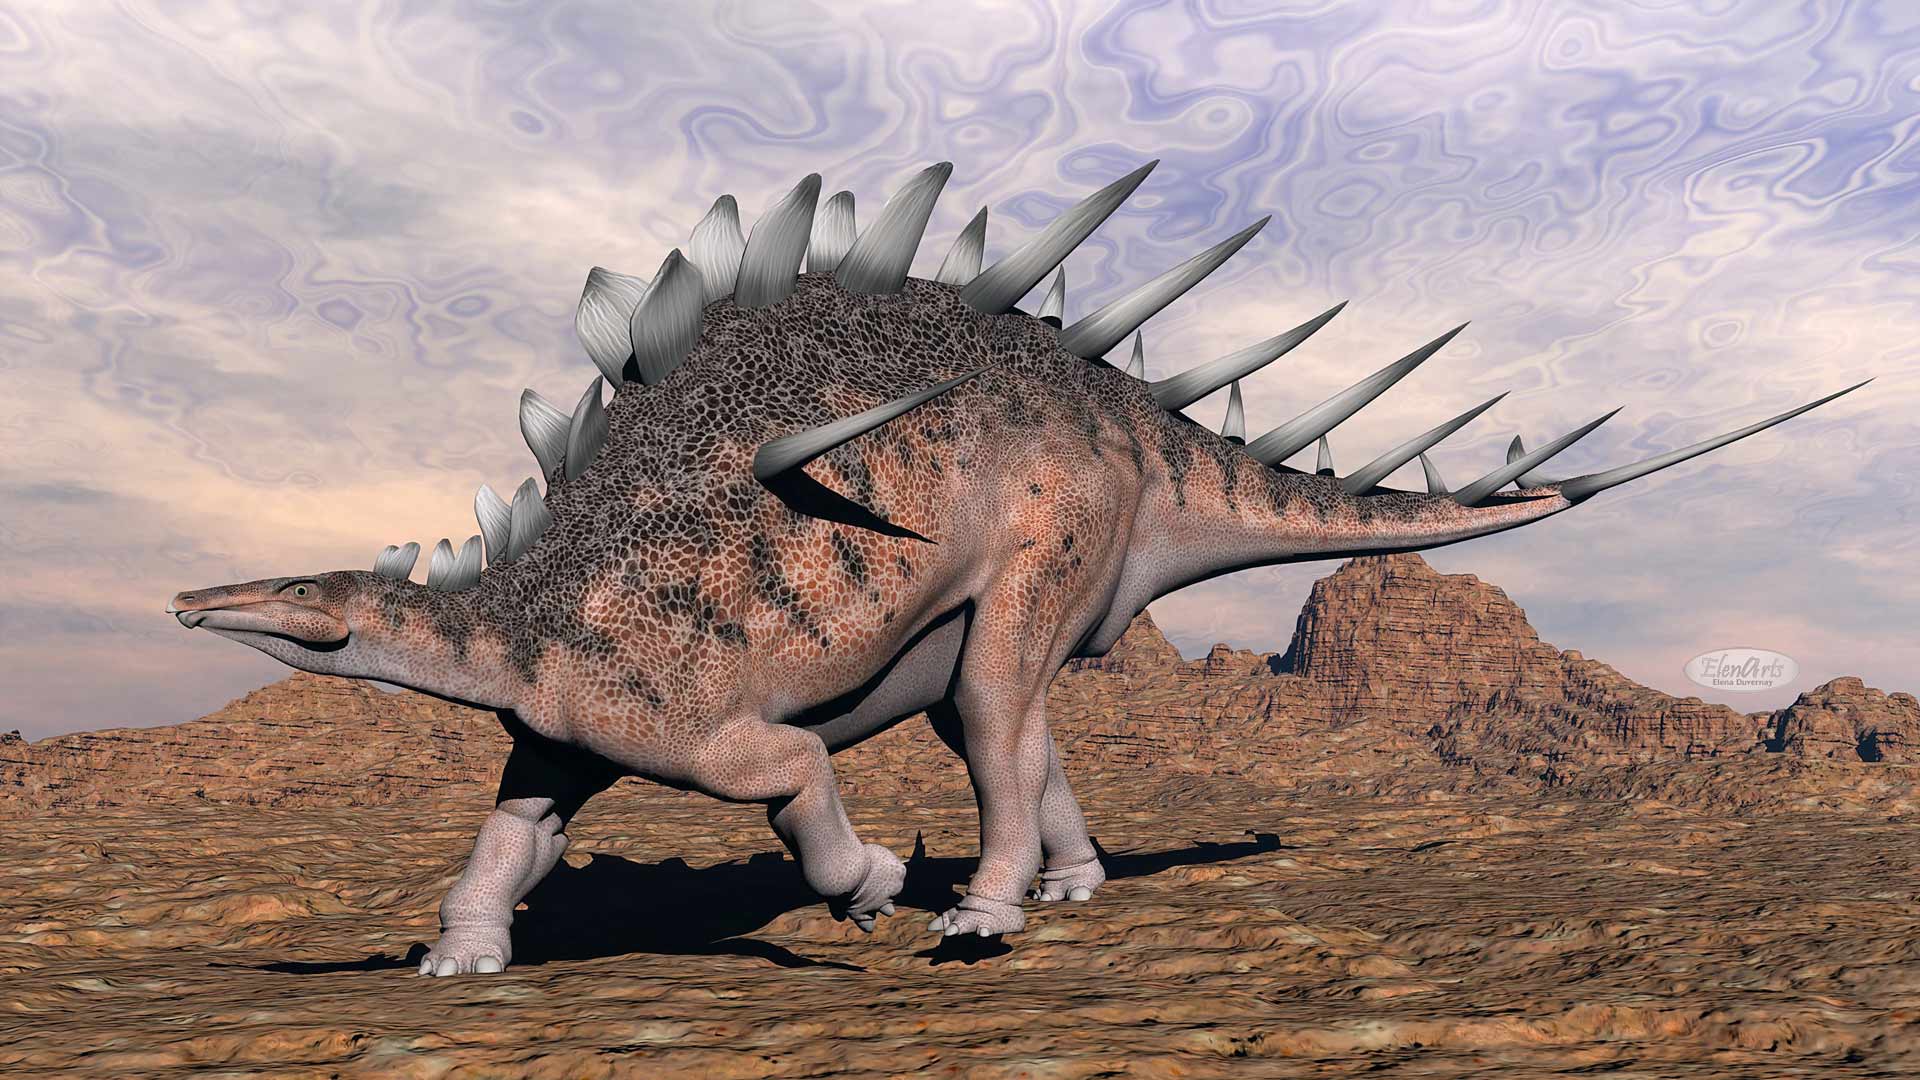 Kentrosaurus dinosaur walking in the desert by cloudy sunset light